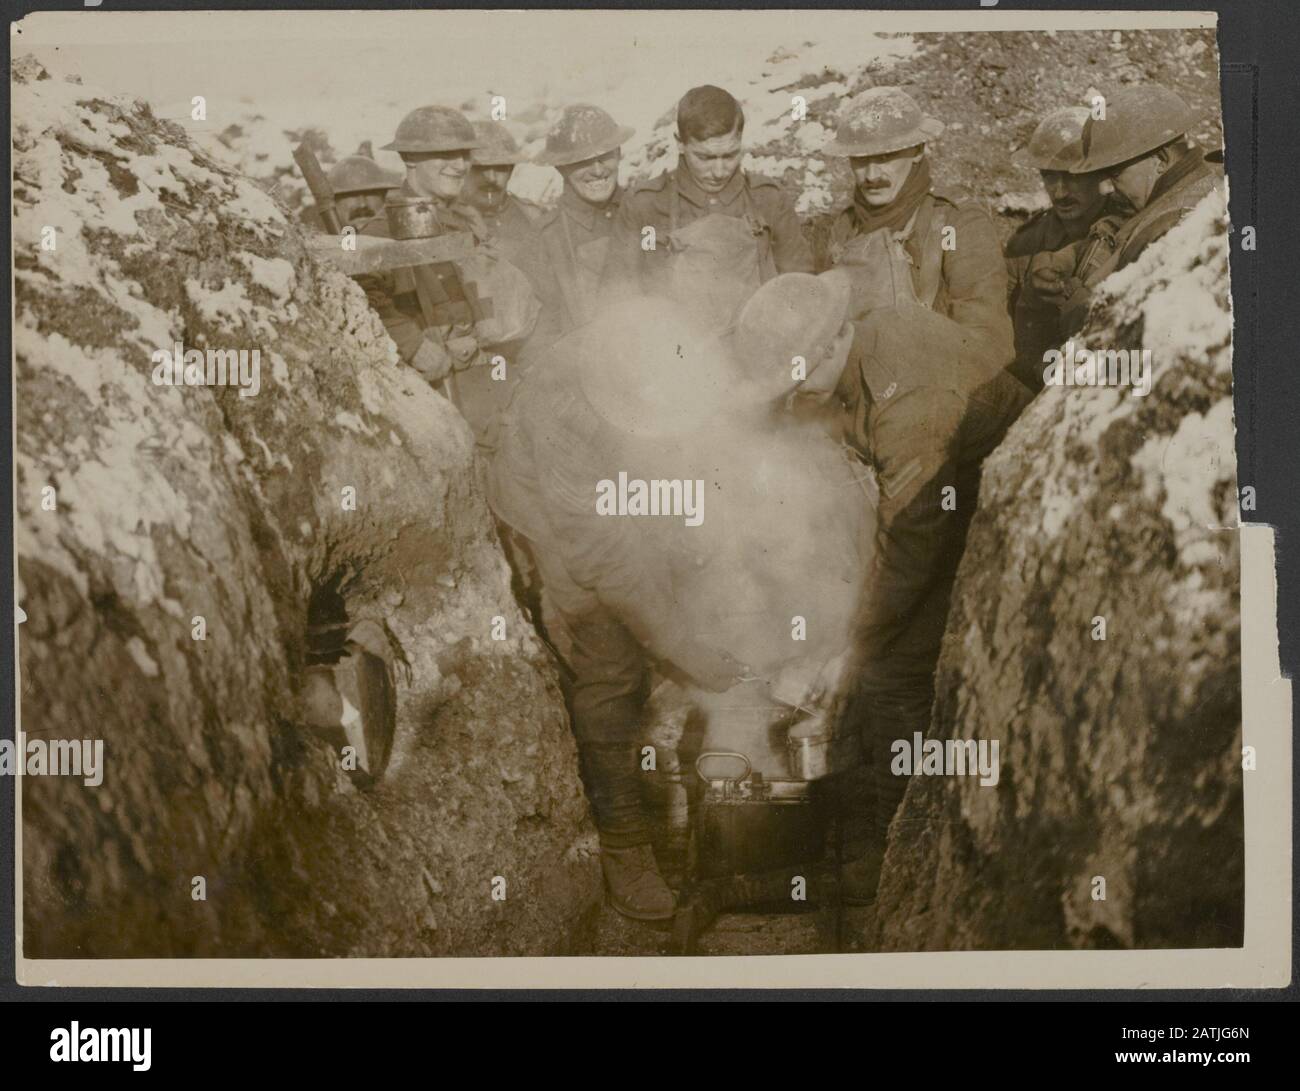 Comida militar fotografías e imágenes de alta resolución - Alamy